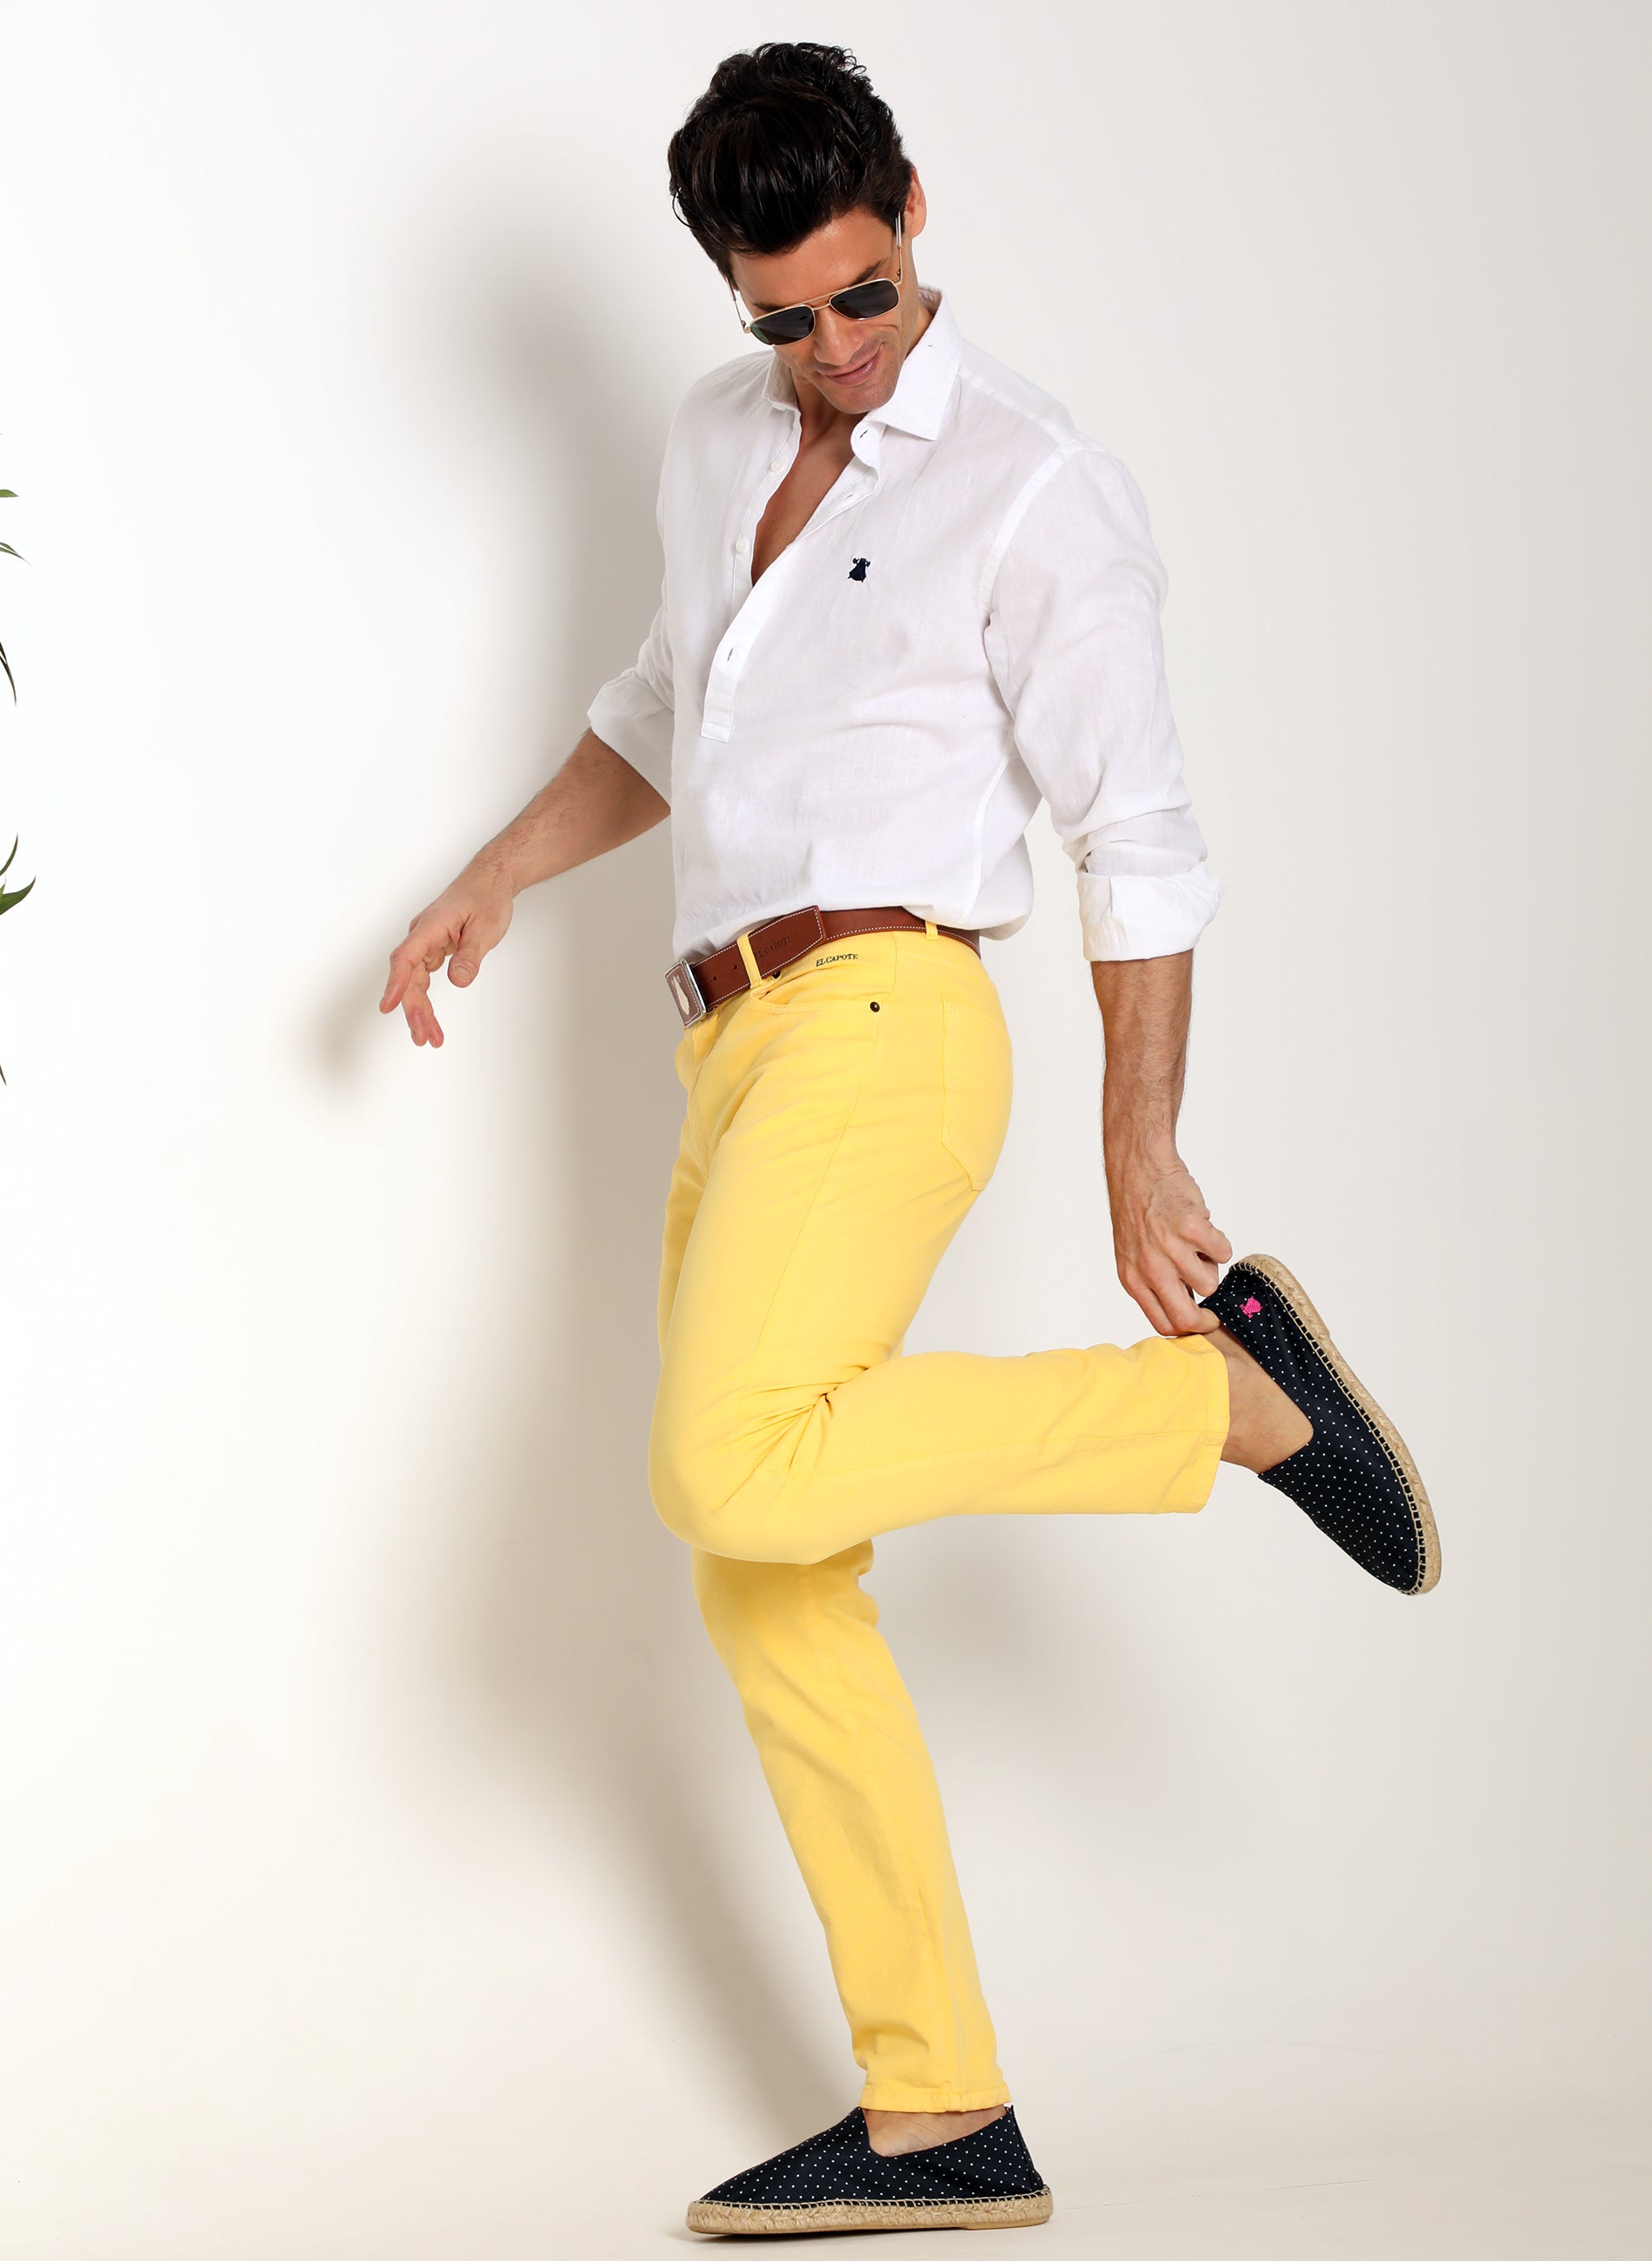 Men's yellow 5-pocket pants